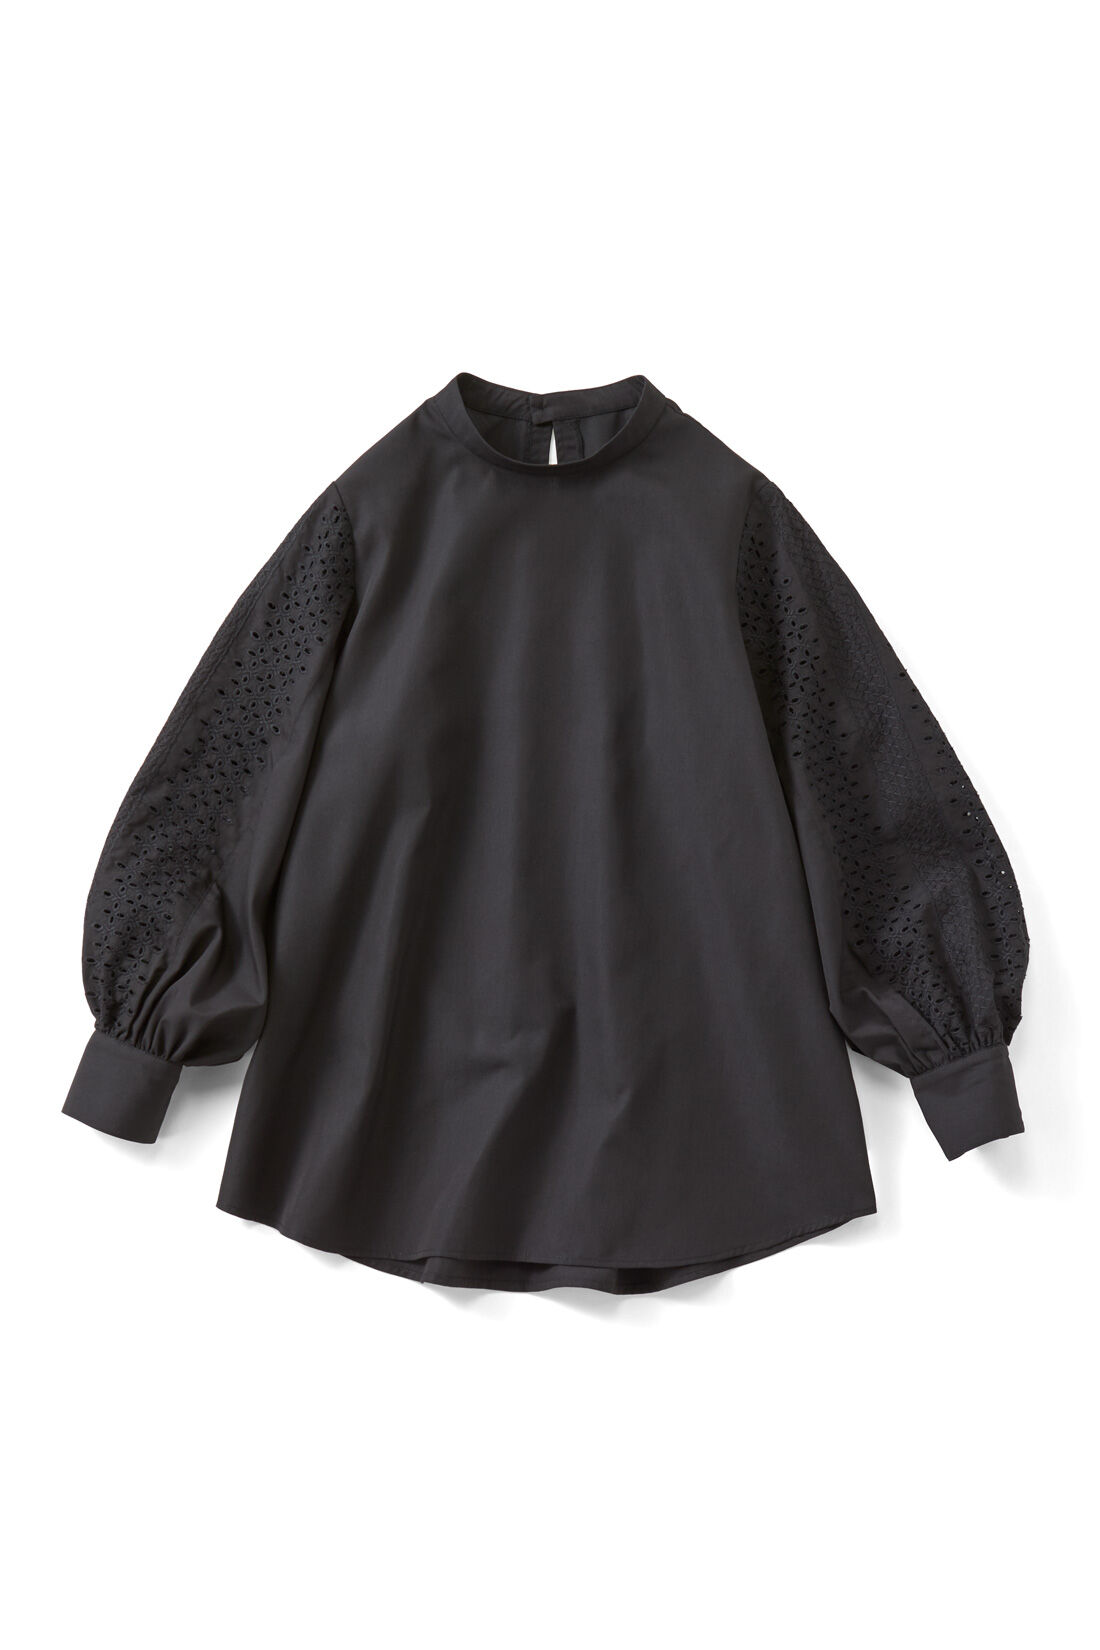 IEDIT|IEDIT[イディット]　アンティーク風デザインの袖レースブラウス〈ブラック〉|ブラック